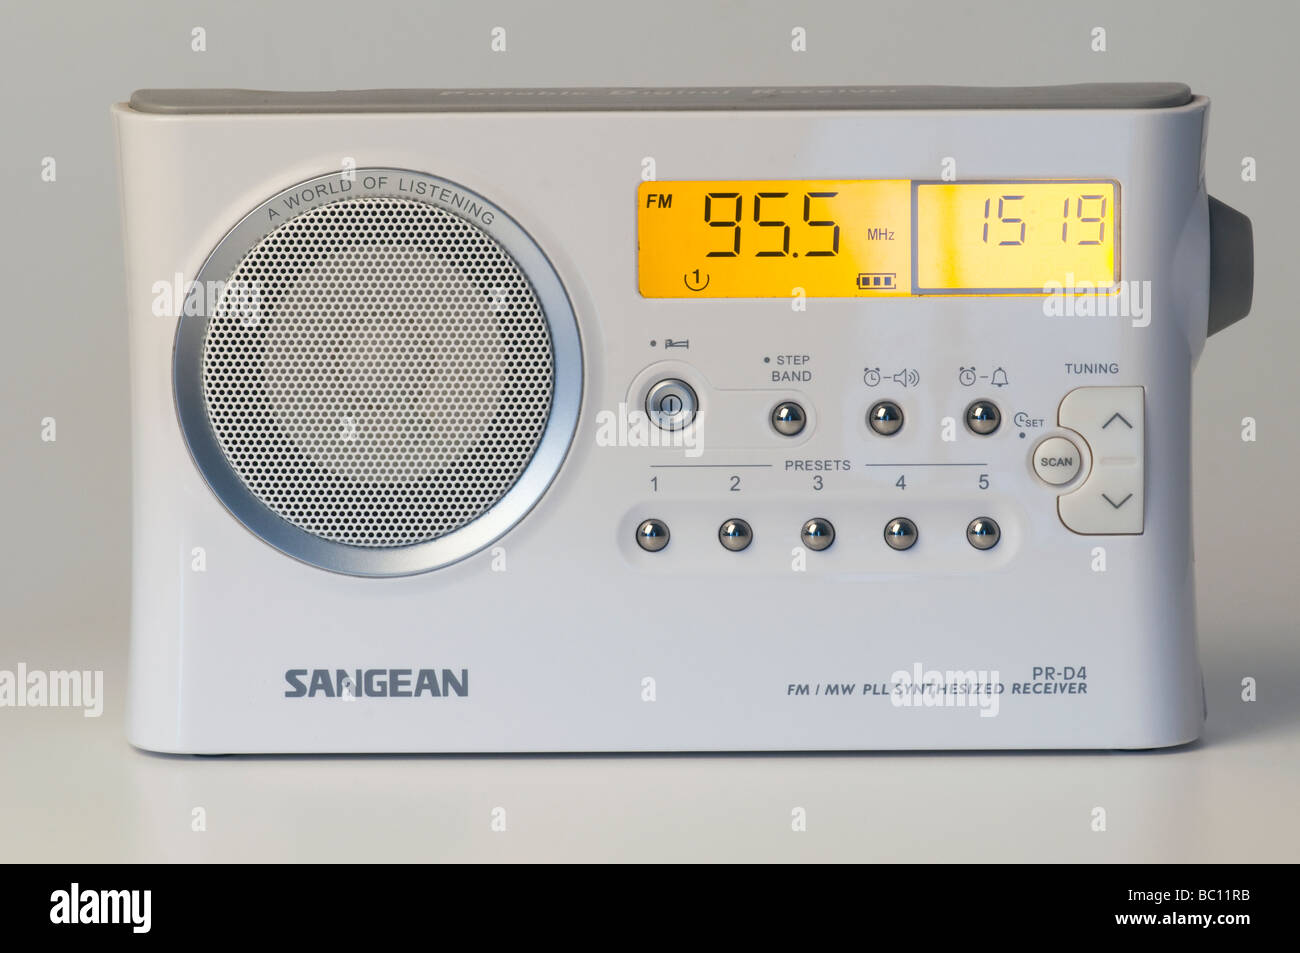 Sangean radio portatile FM ricevitore digitale Foto stock - Alamy